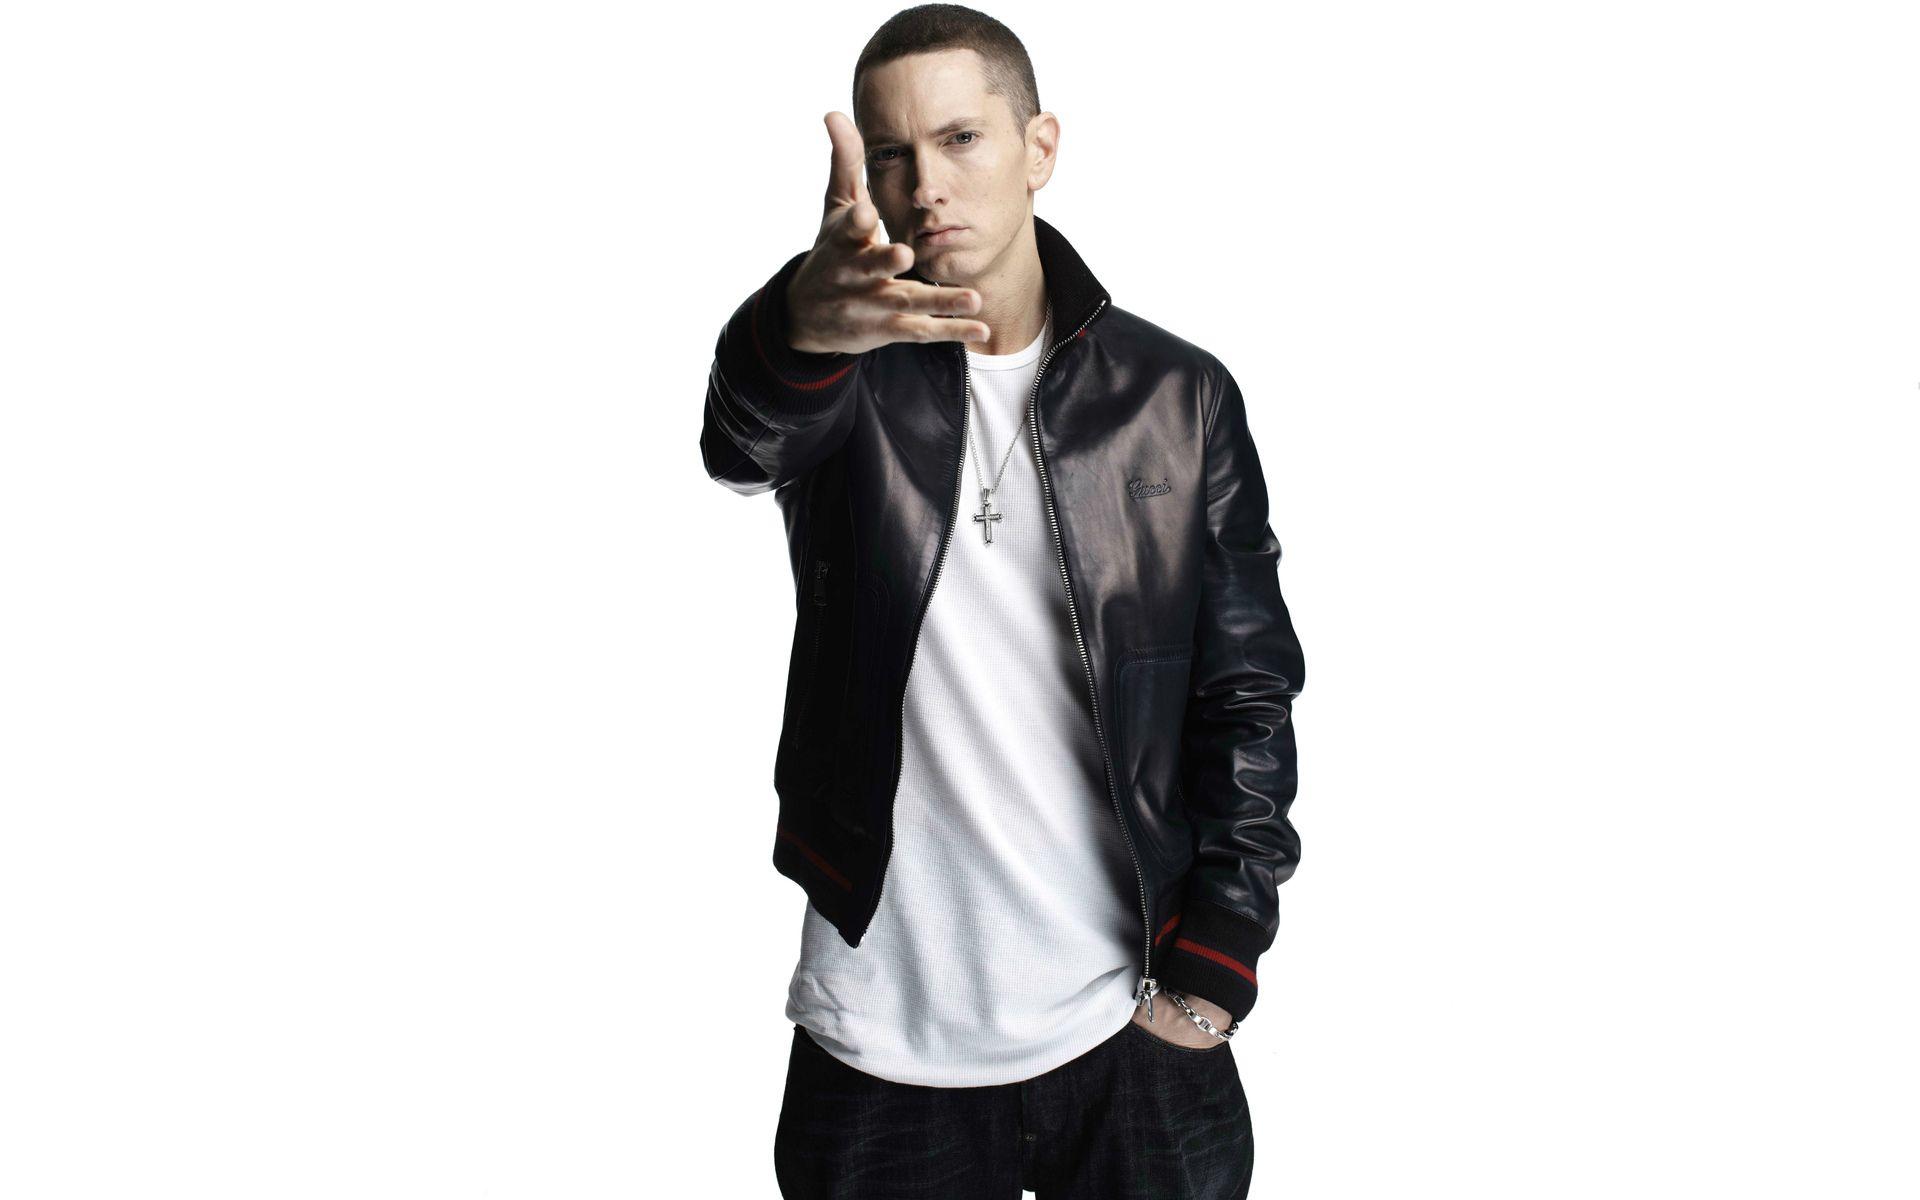 Eminem Rap God Wallpaper 1080p, Celebrities Wallpaper